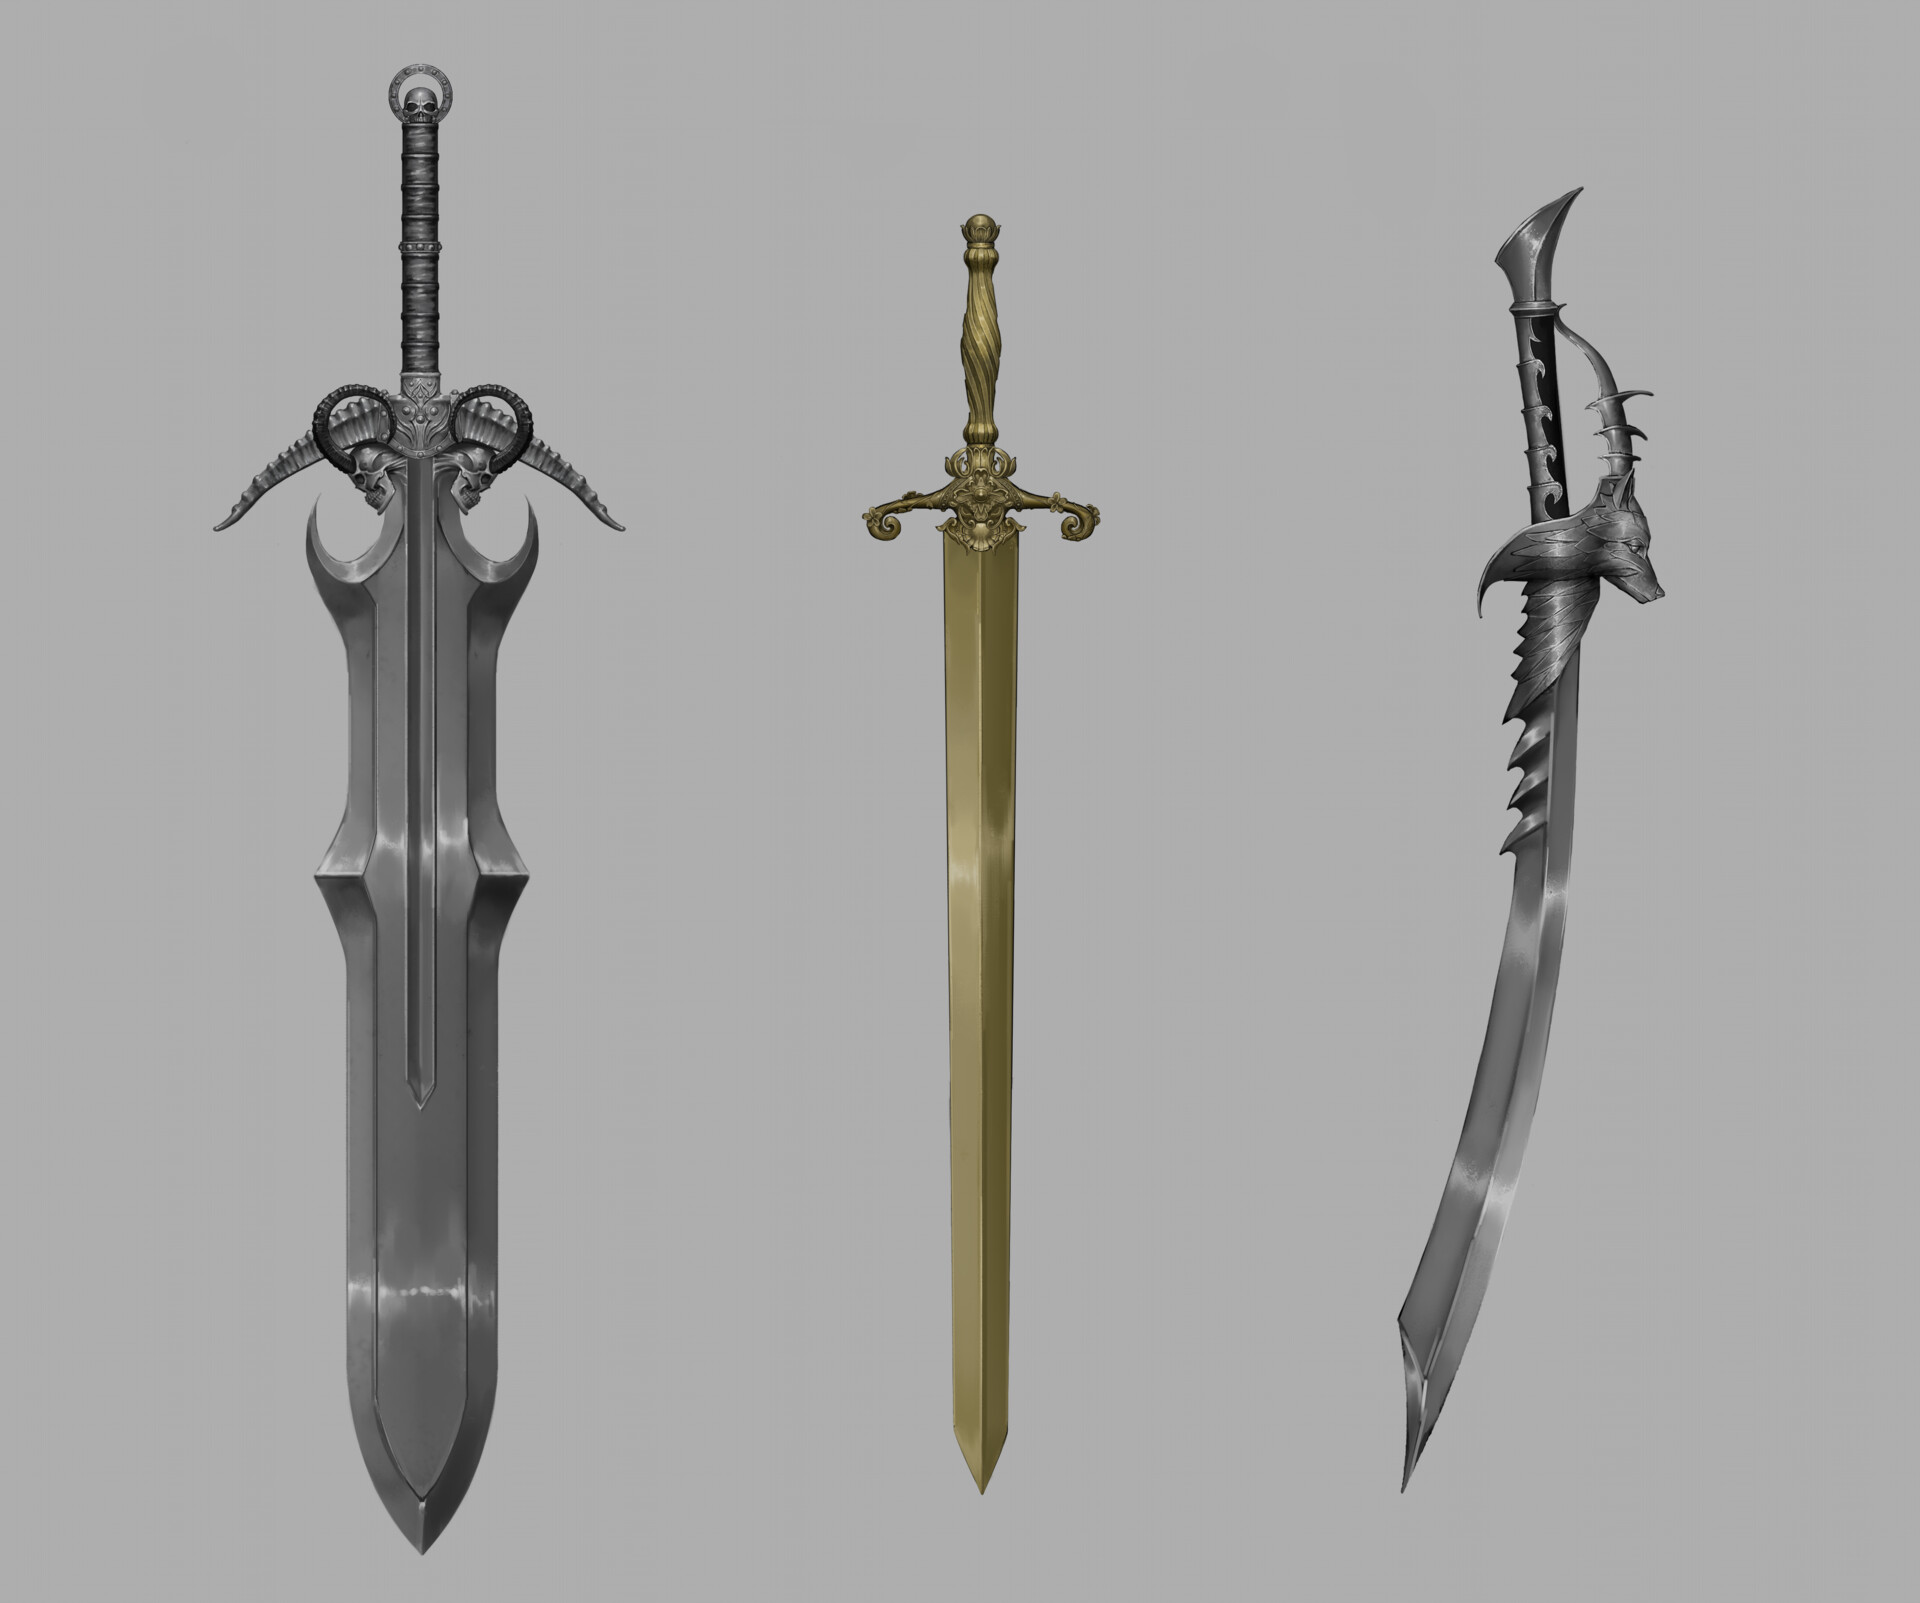 ArtStation - 3 types of swords